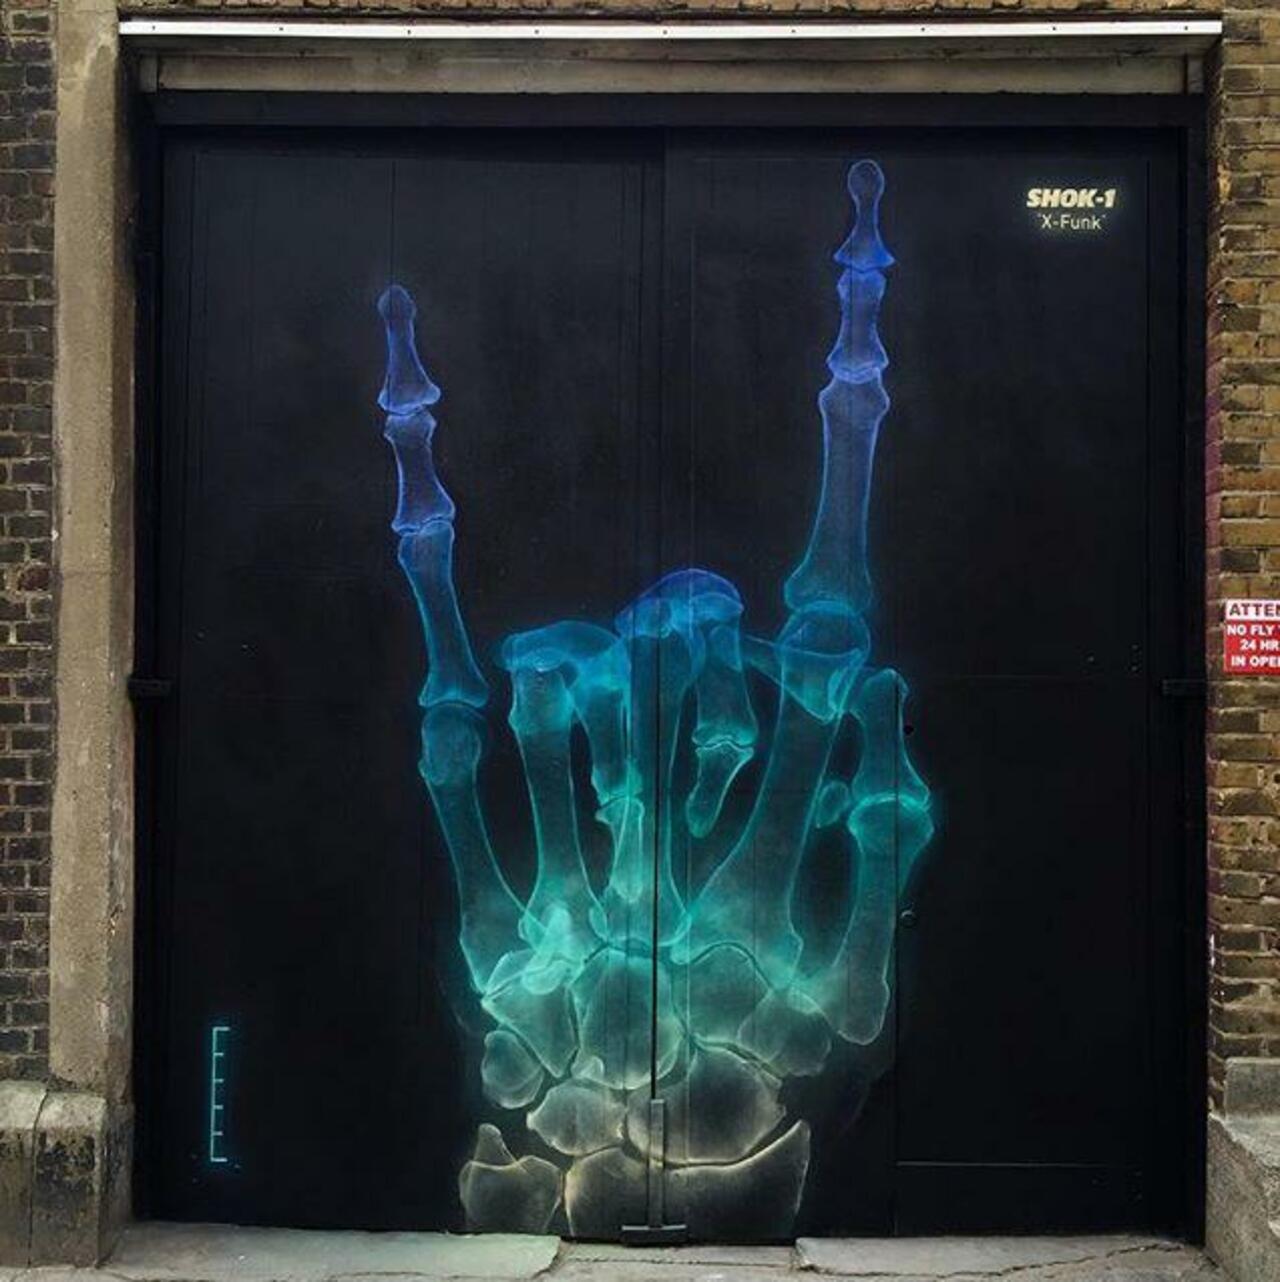 RT @GoogleStreetArt: New aerosol X Ray Street Art by Shok-1 in London

#art #arte #graffiti #streetart http://t.co/pAAFHTgwam